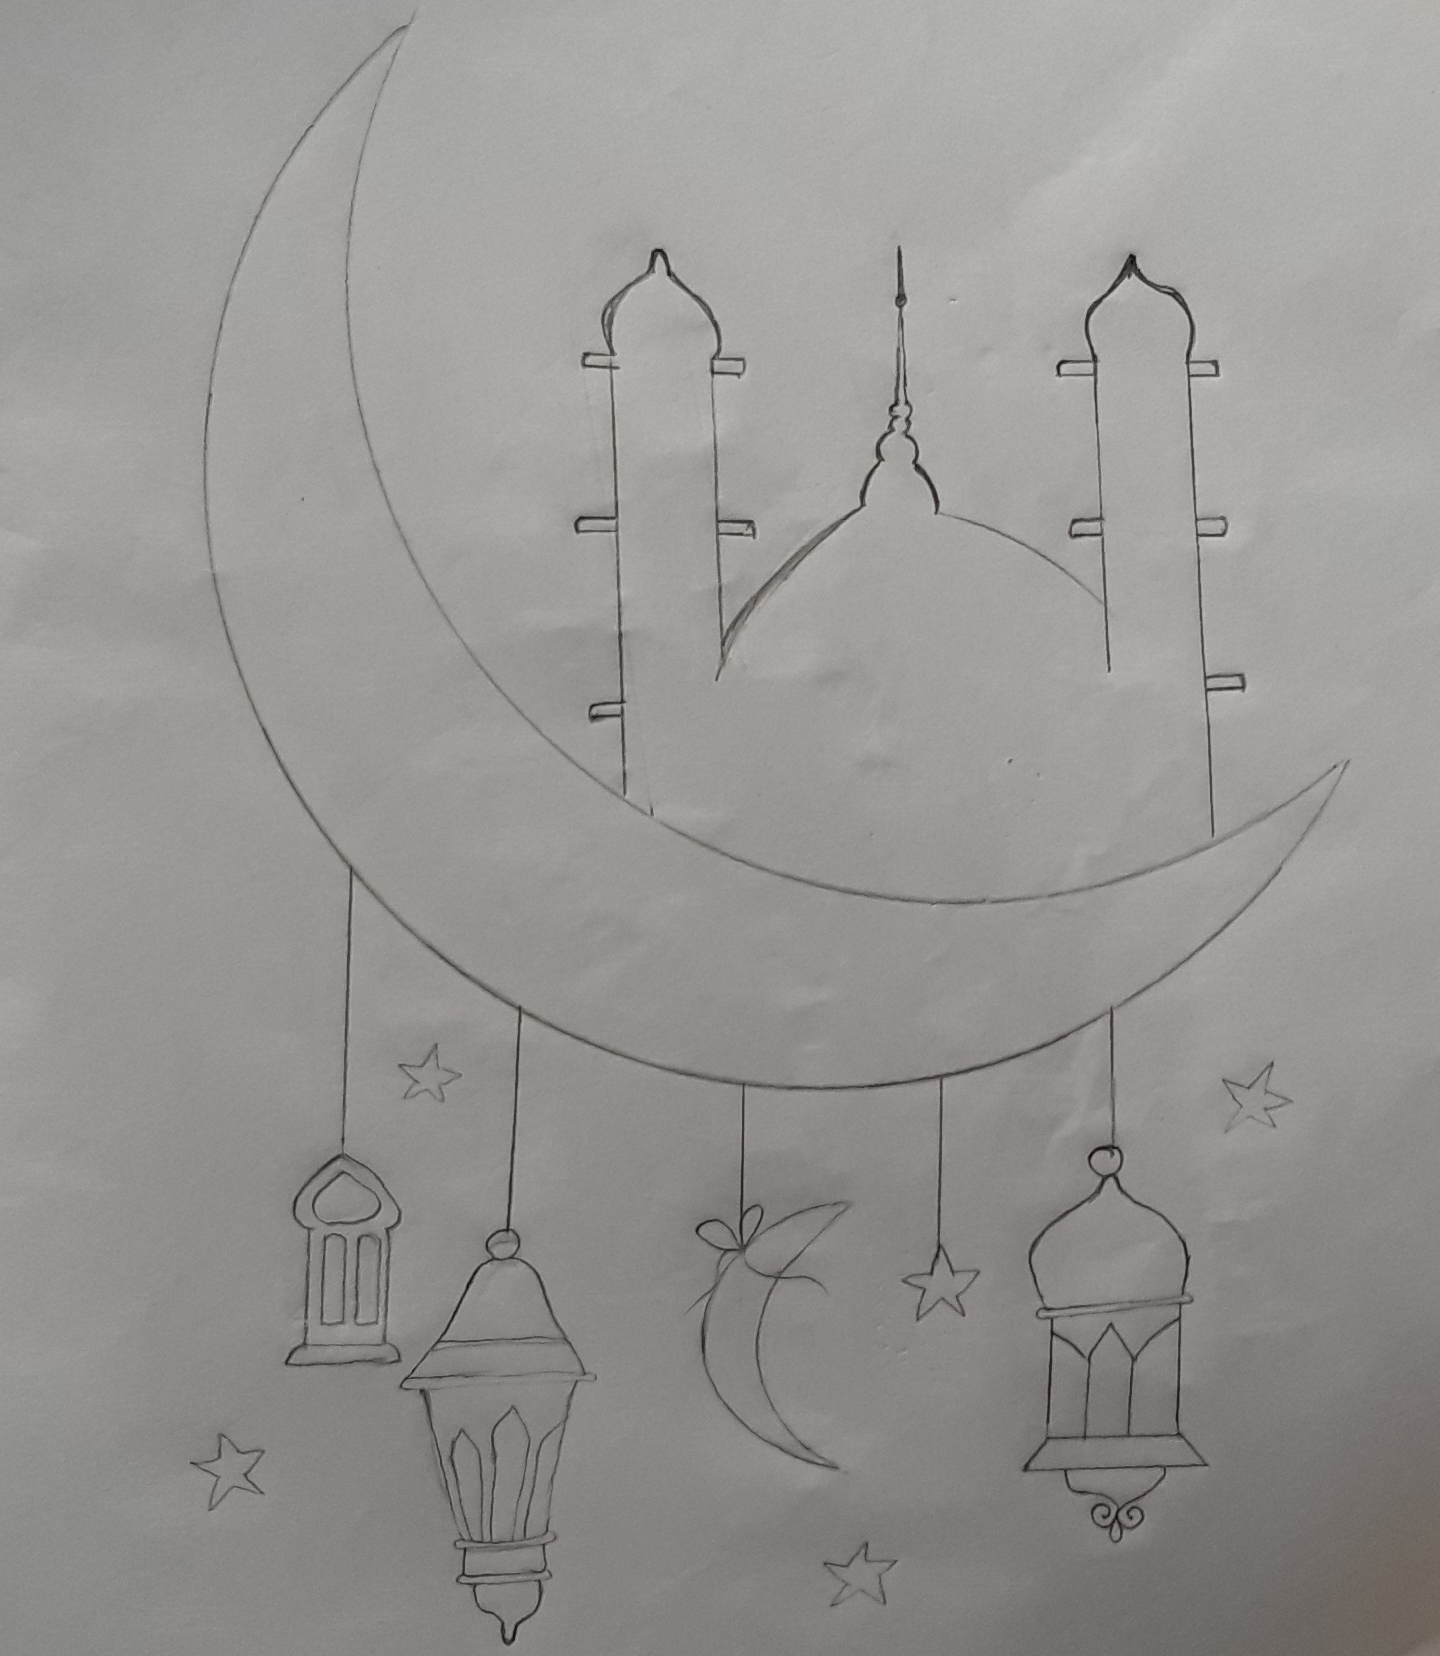 Shiny pencil sketch of sheep and mosque on white background for Islamic  Festival of Sacrifice EidAlAdha celebration  Stock Image  Everypixel